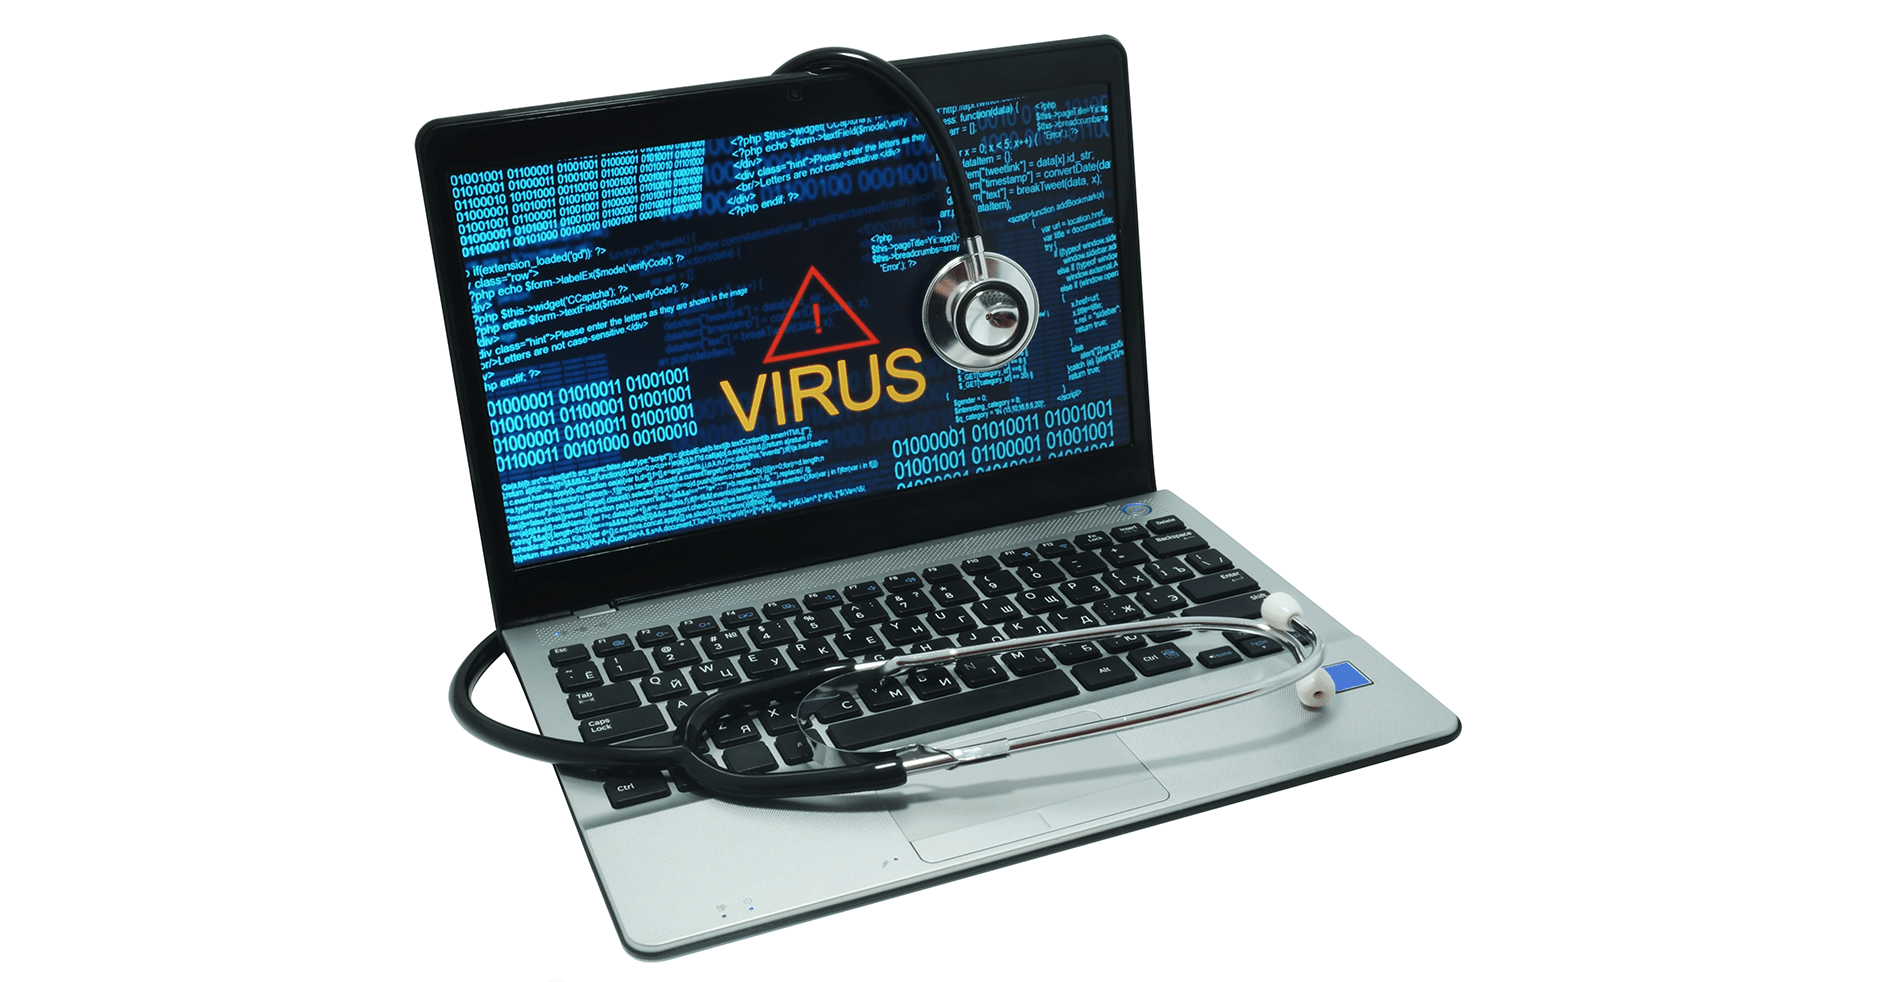 mac laptop with virus